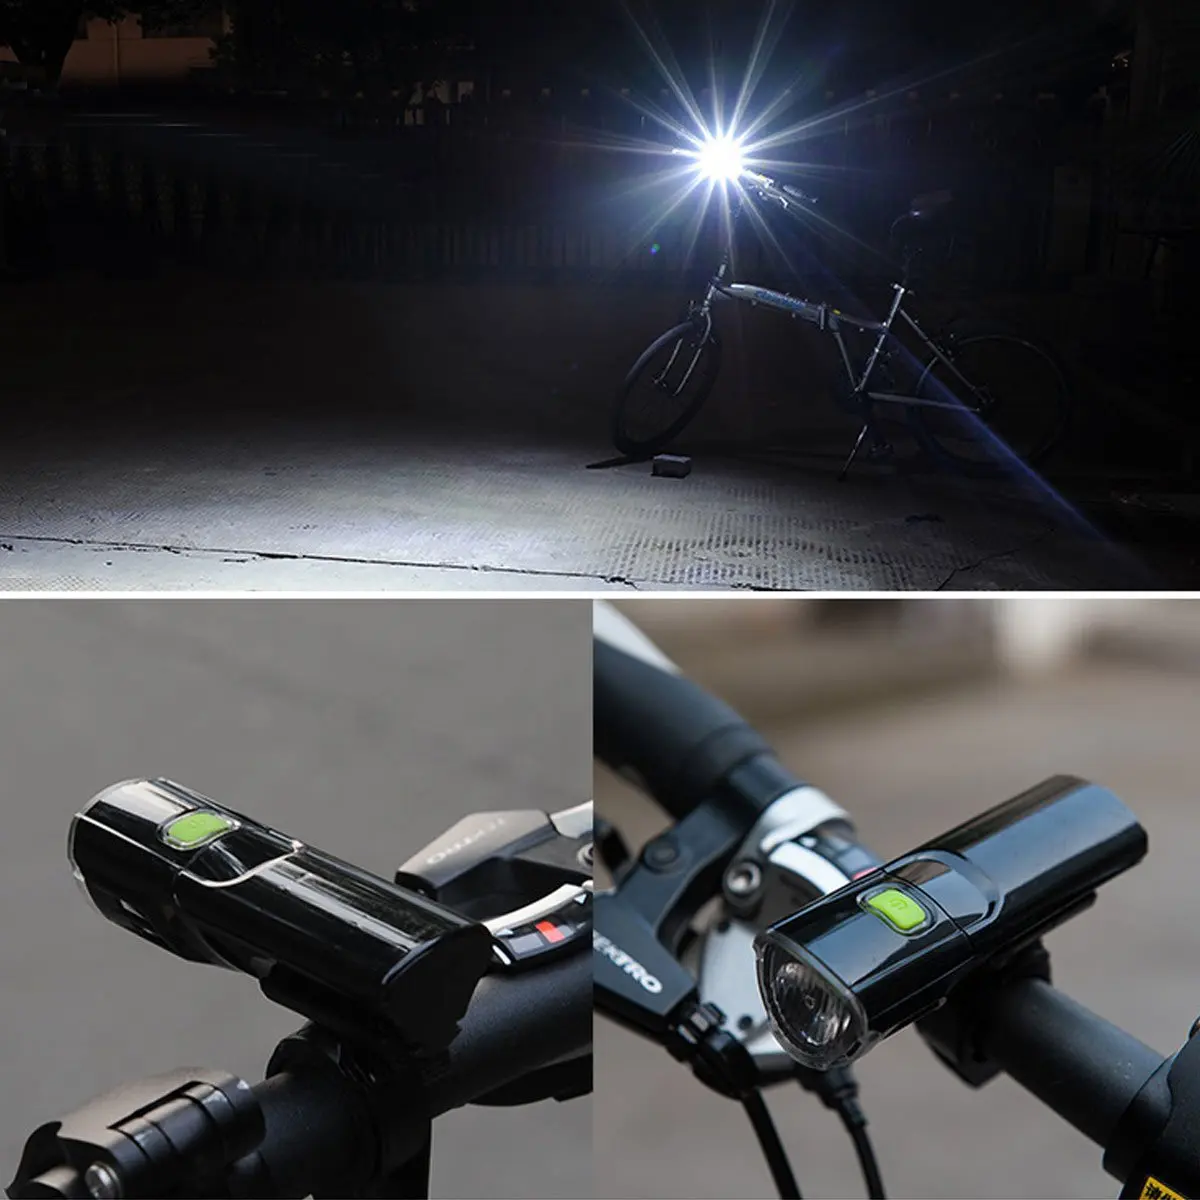 bright bike light